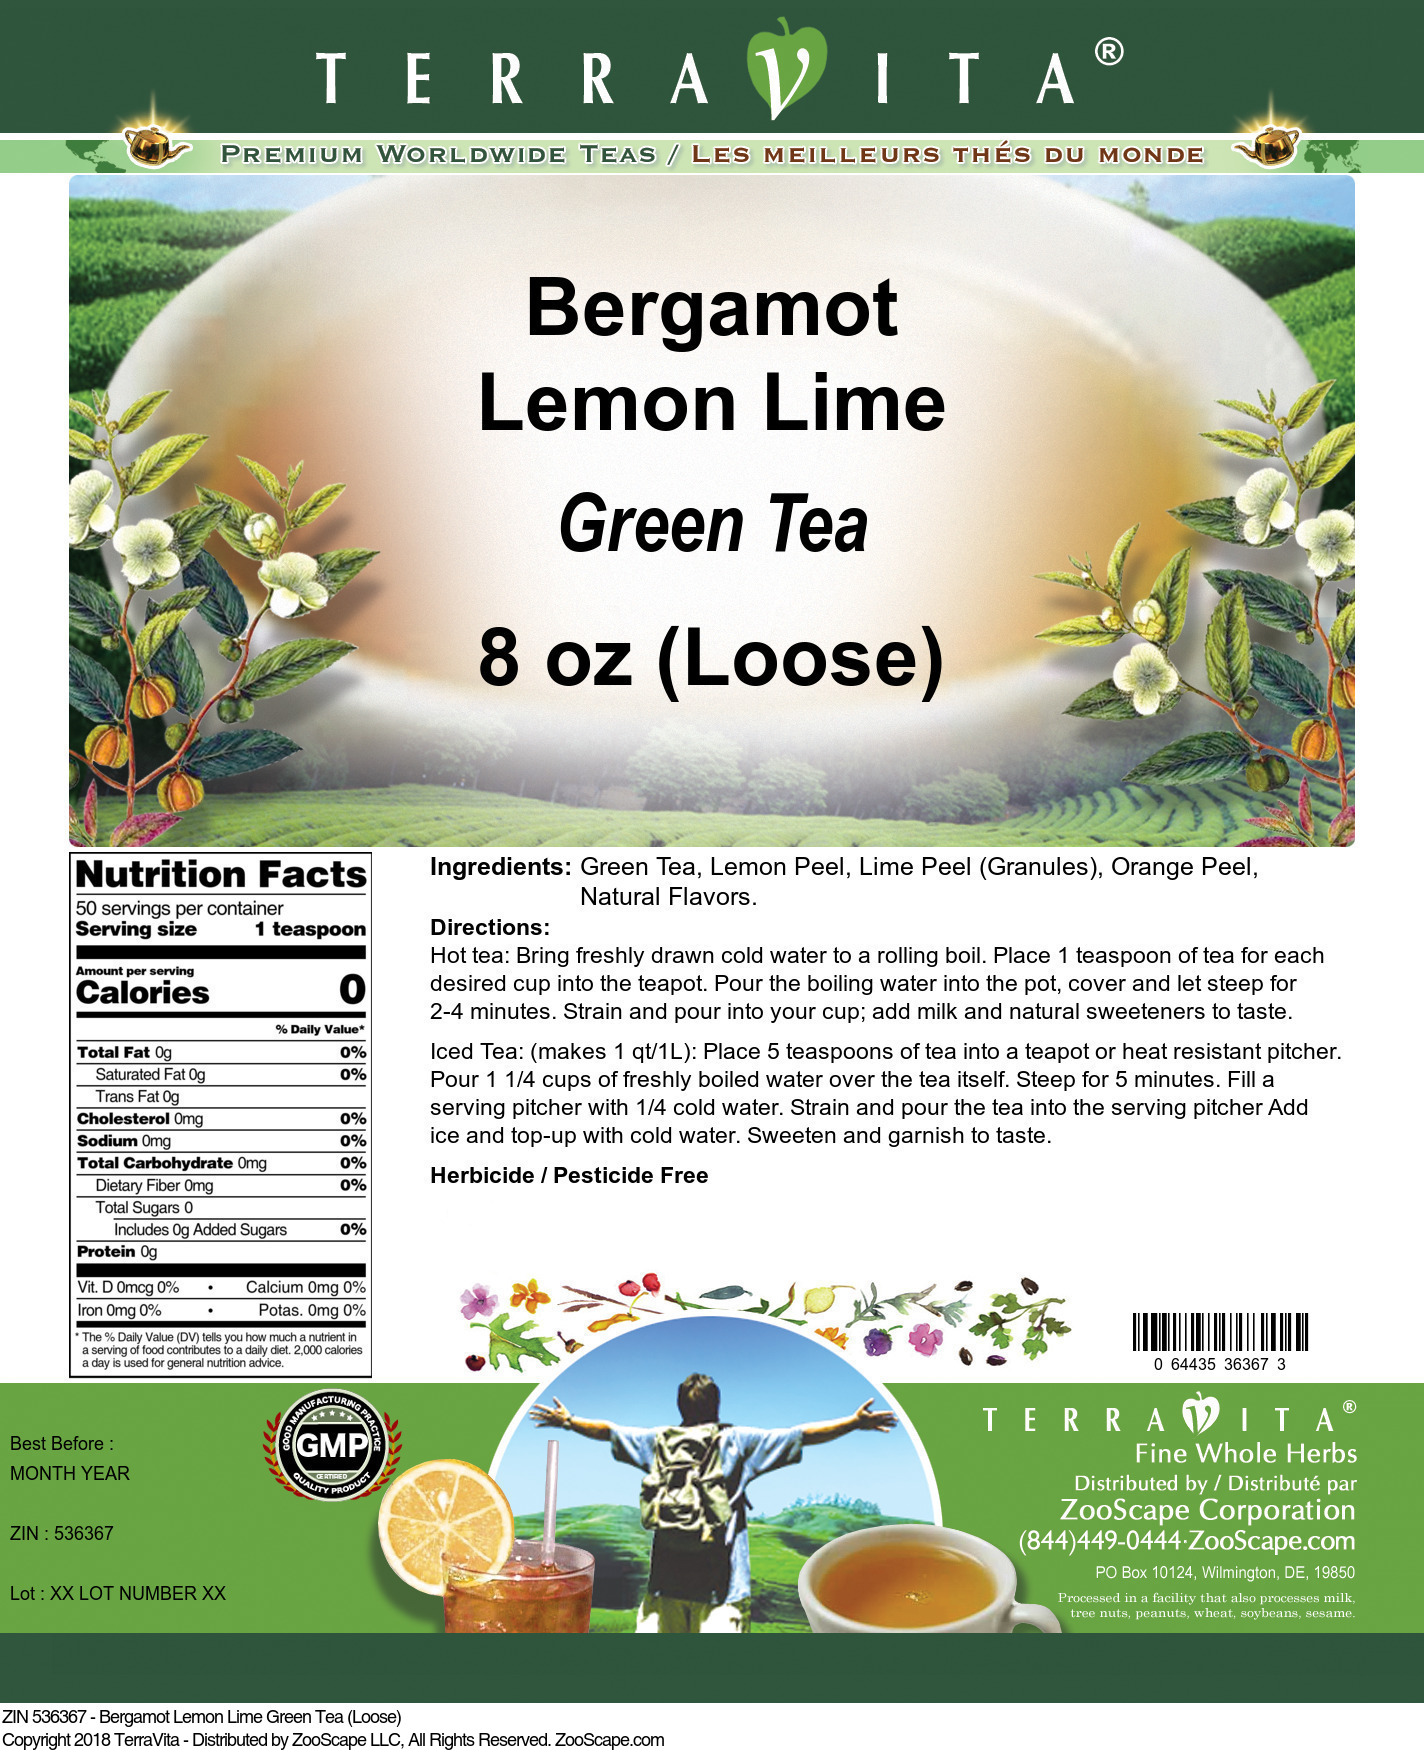 Bergamot Lemon Lime Green Tea (Loose) - Label